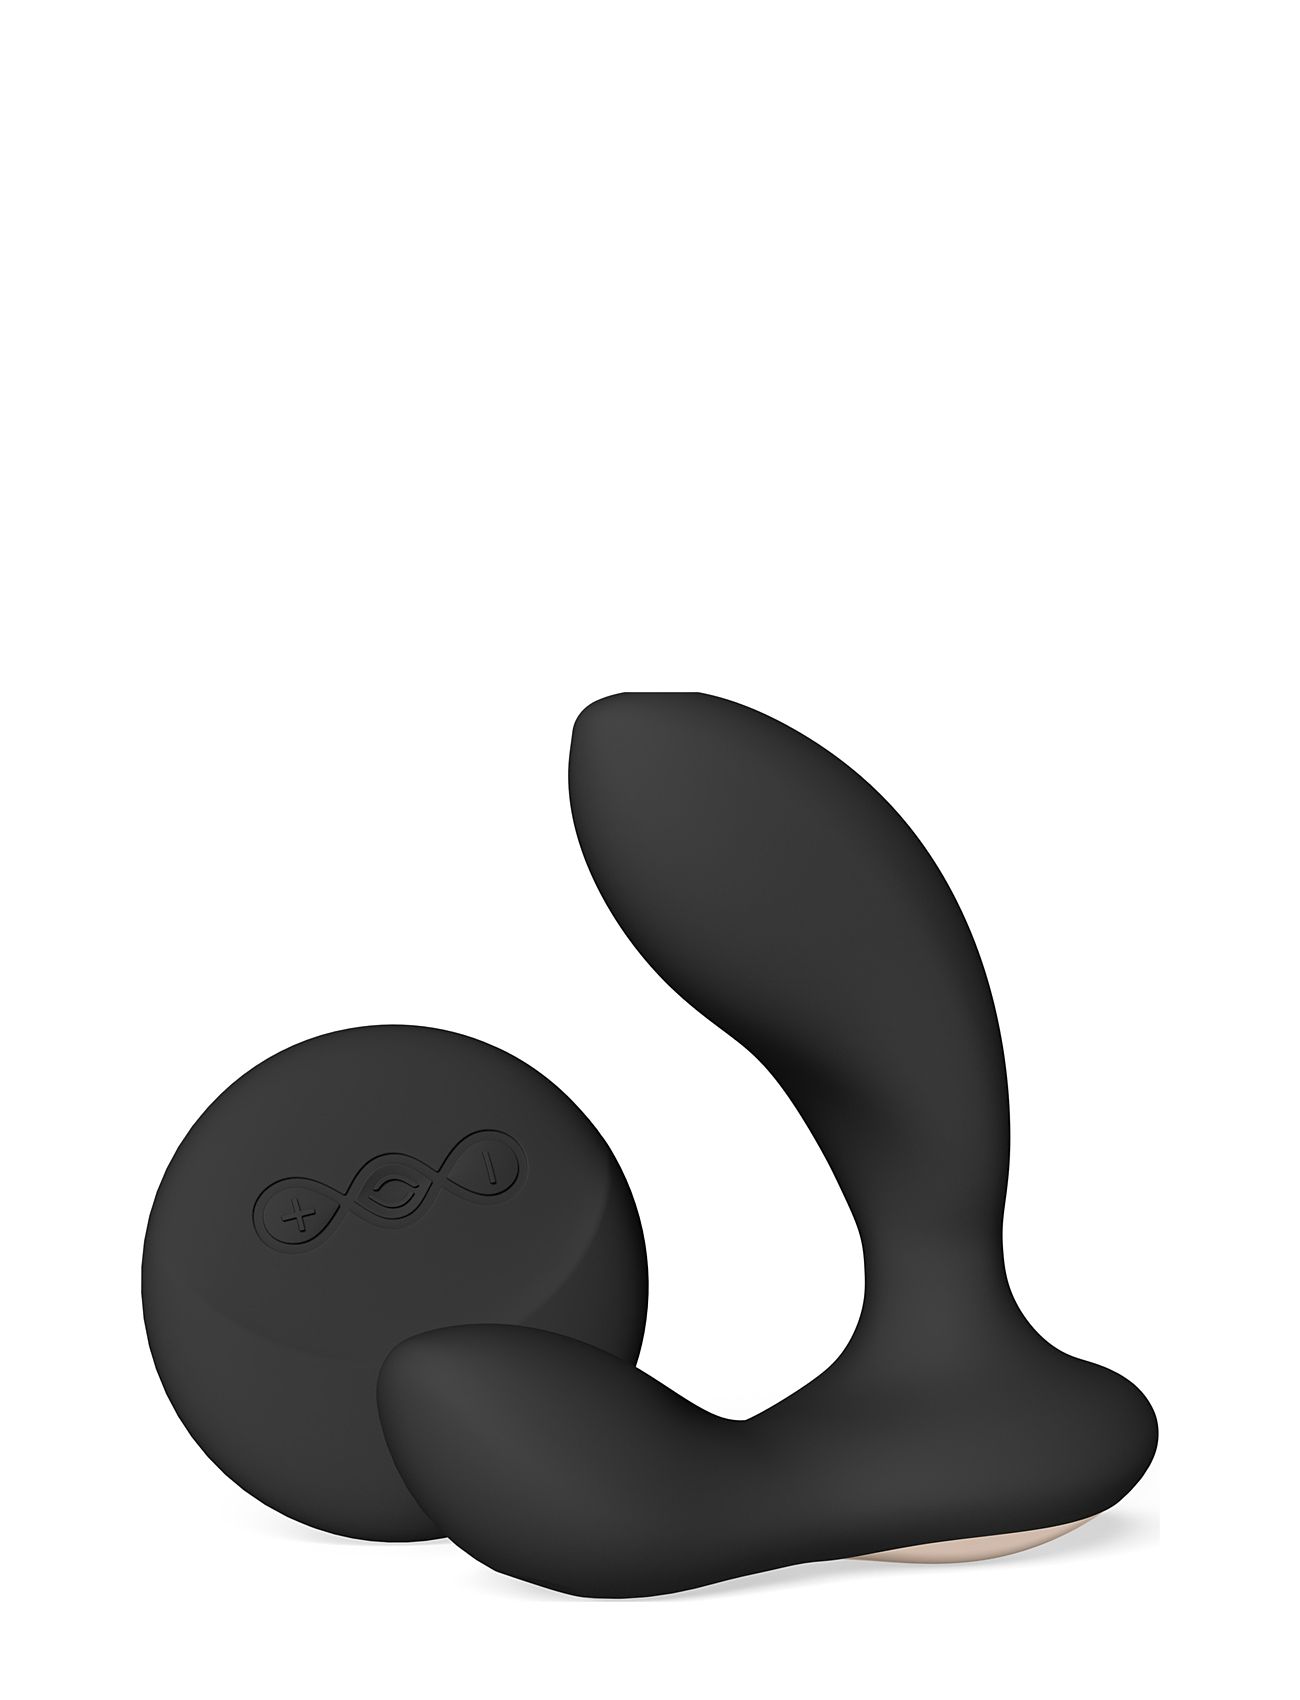 Hugo™ 2 Remote Black Beauty Women Sex And Intimacy Vibrators Black LELO